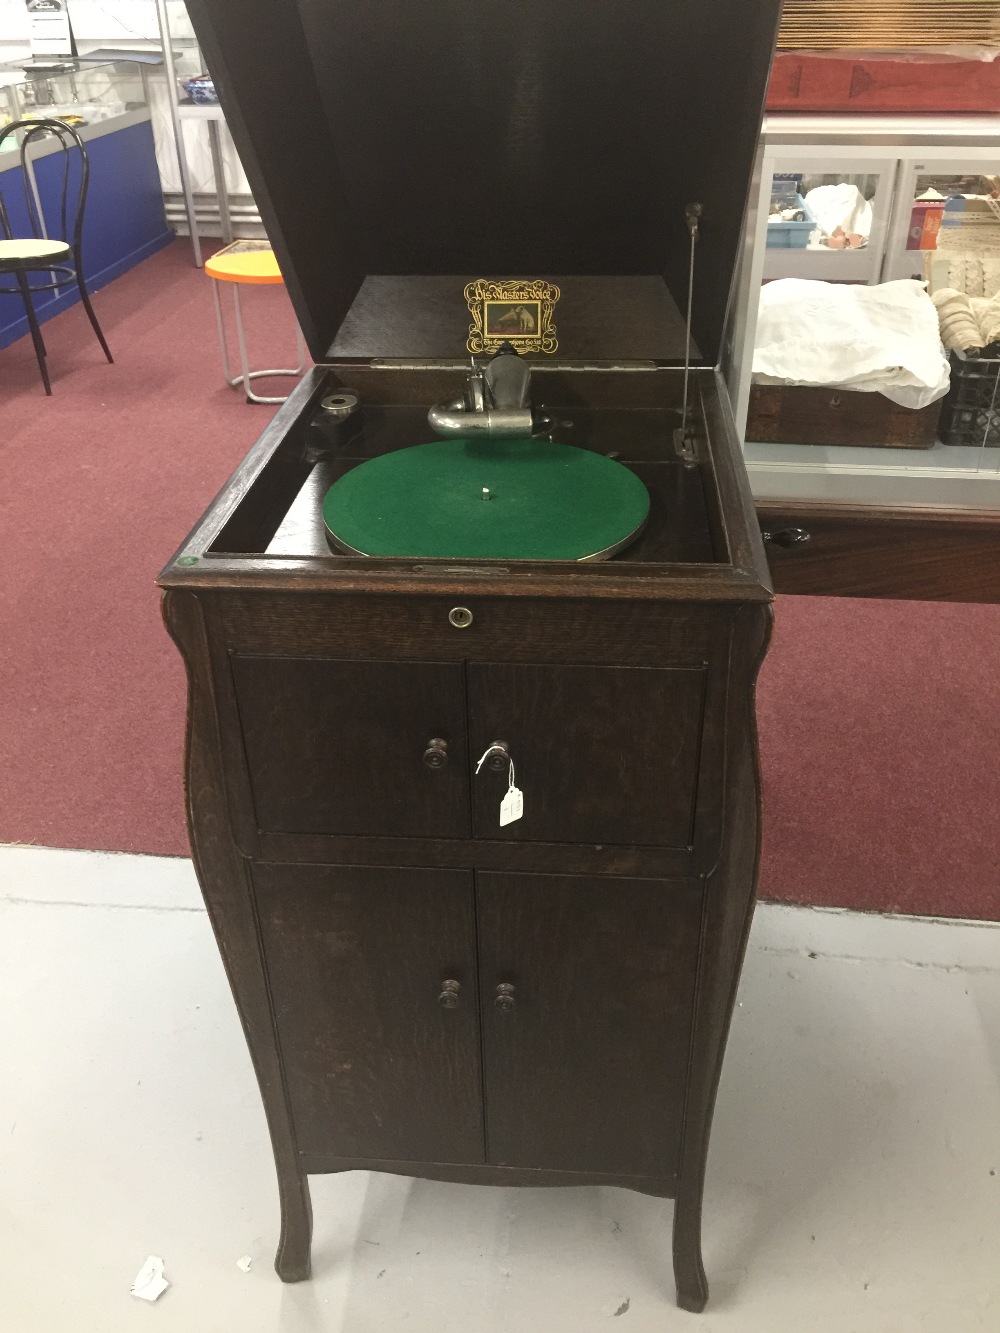 HMV Oak cabinet gramophone plus miscellaneous records.